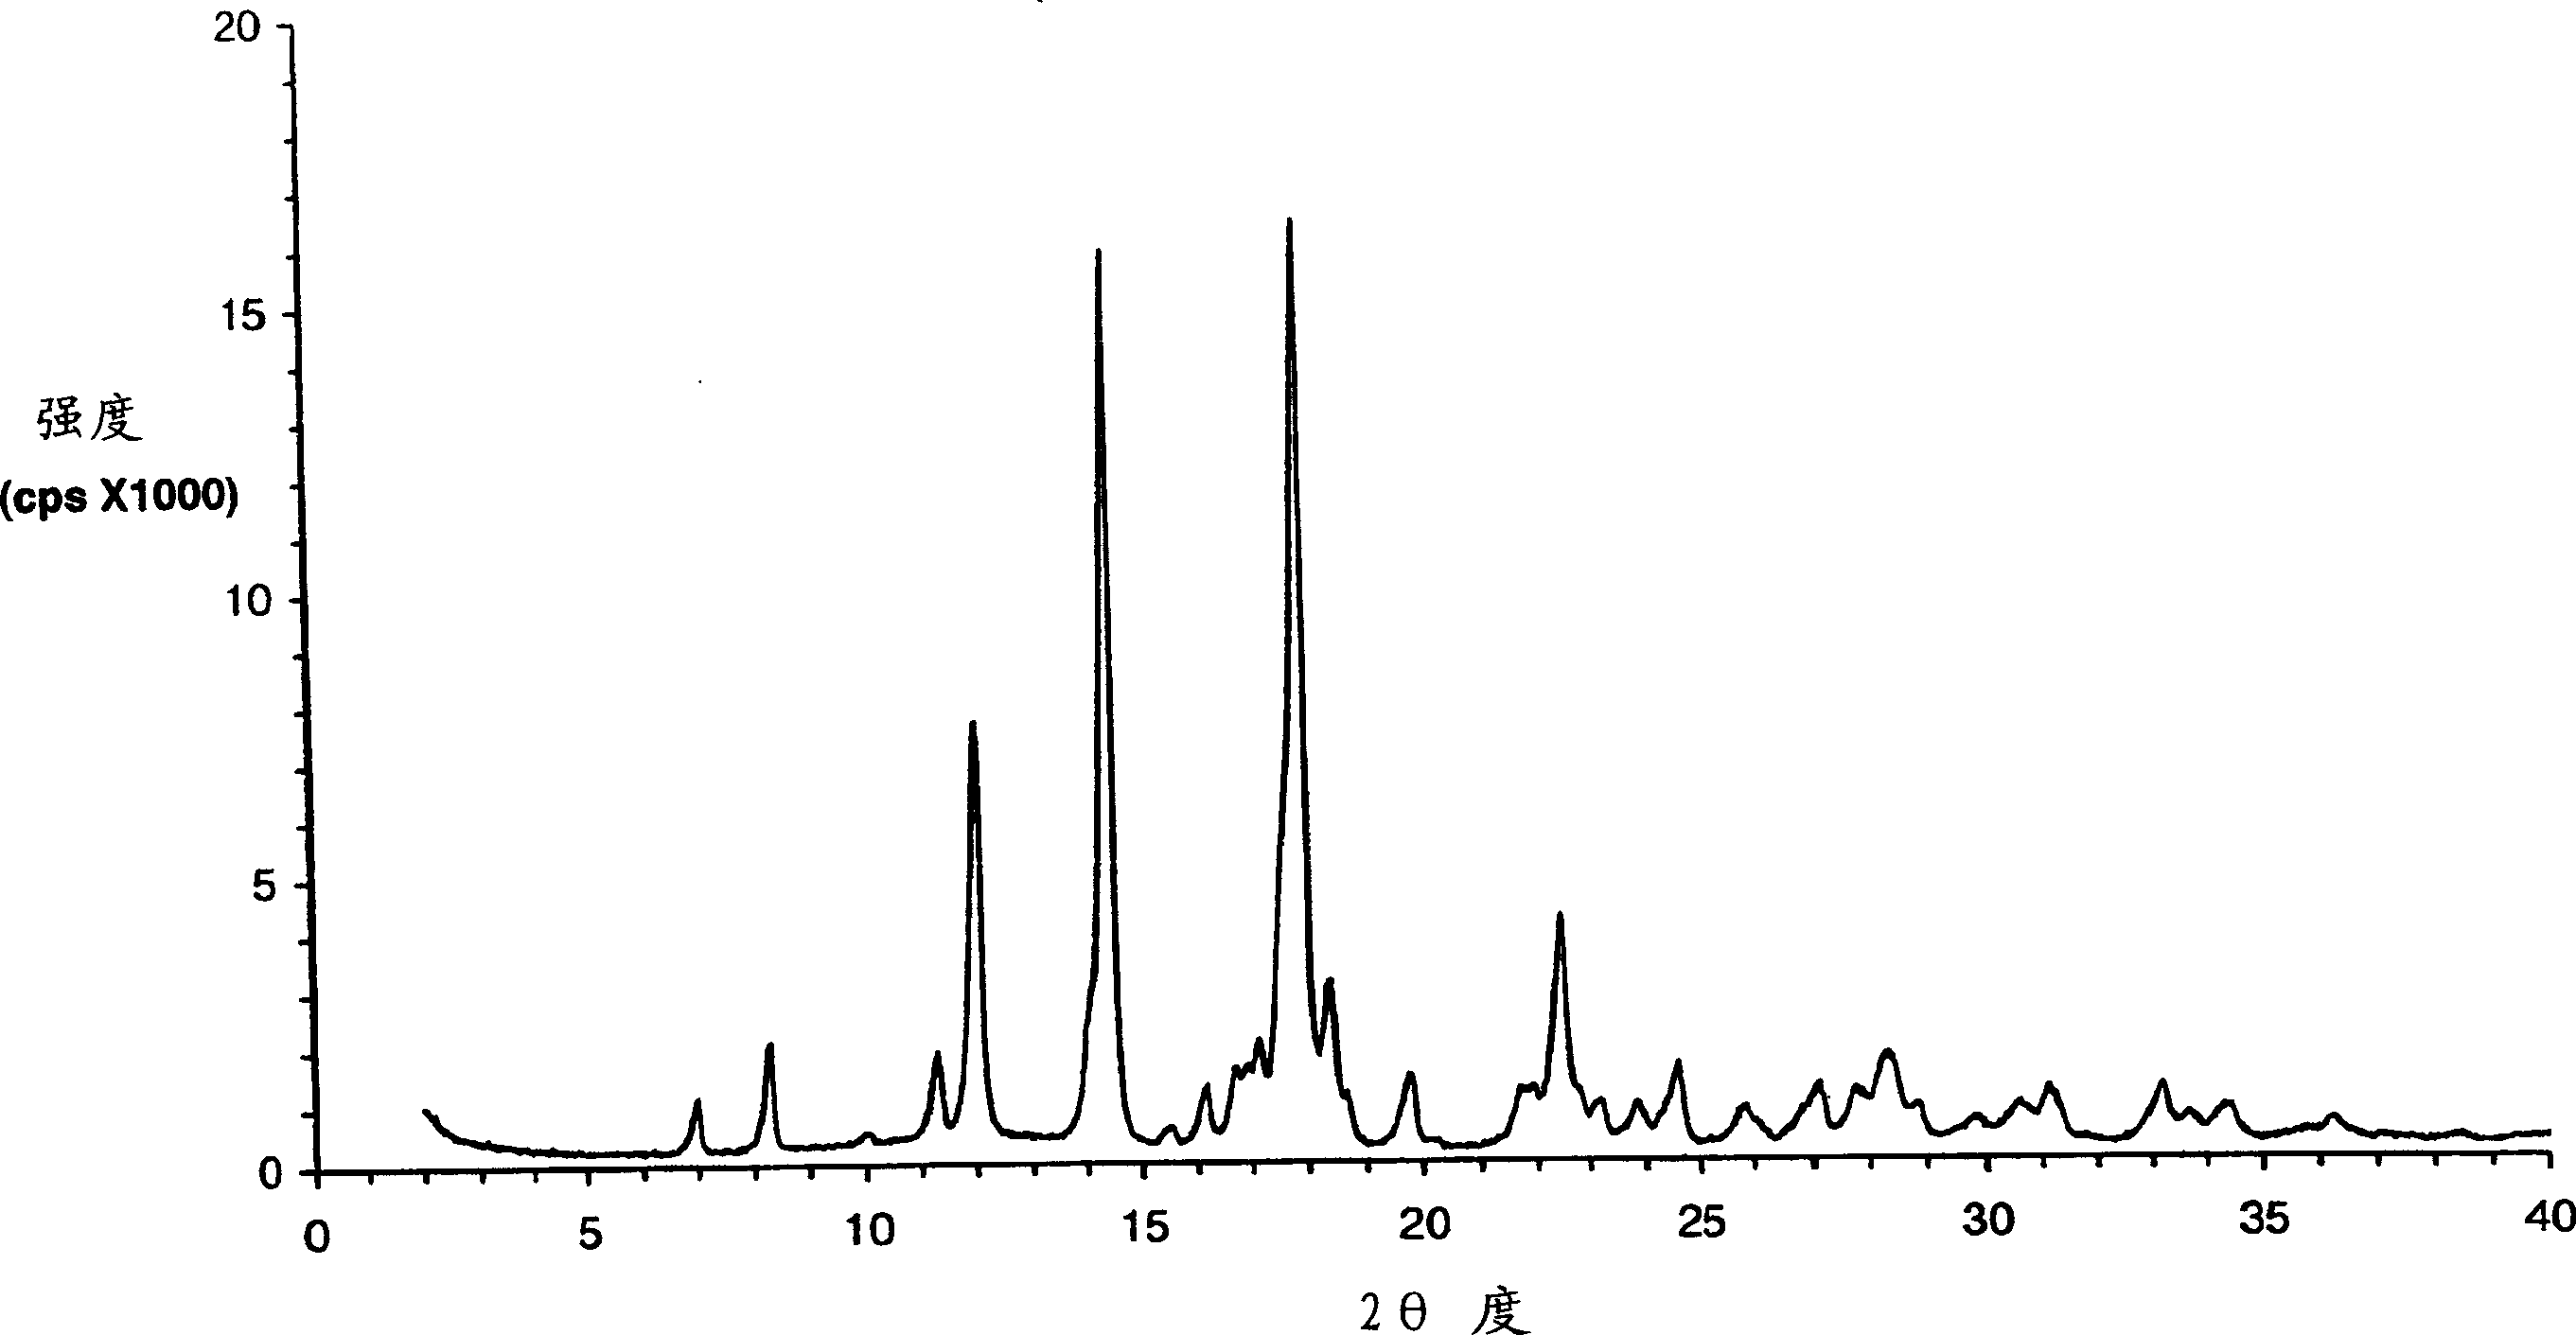 Eplerenone crystalline form exhibiting enhanced dissolution rate